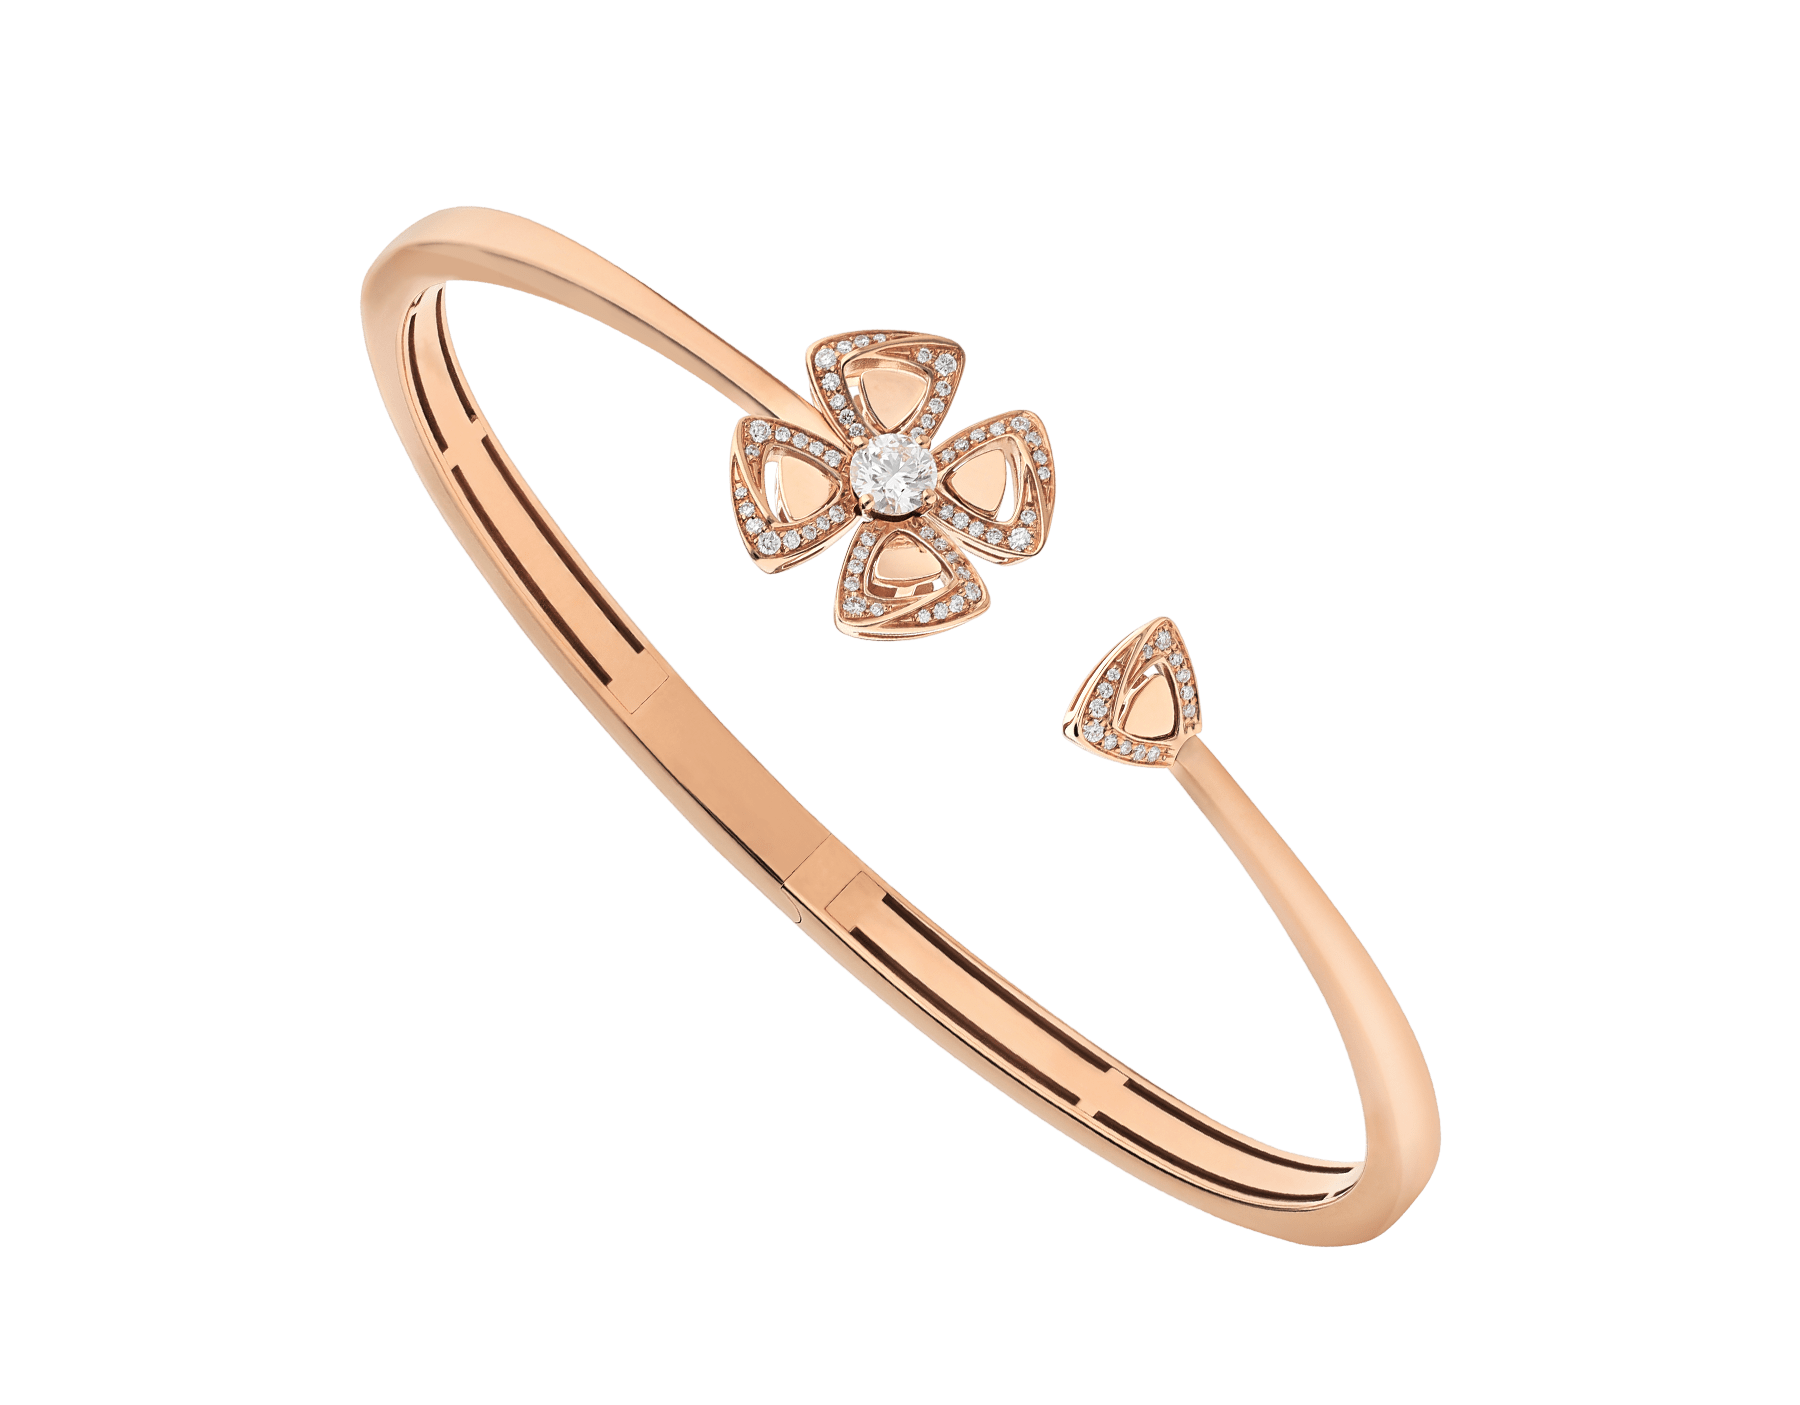 Fiorever 18 kt rose gold bracelet set with a central diamond and pavé diamonds. BR858672 image 1